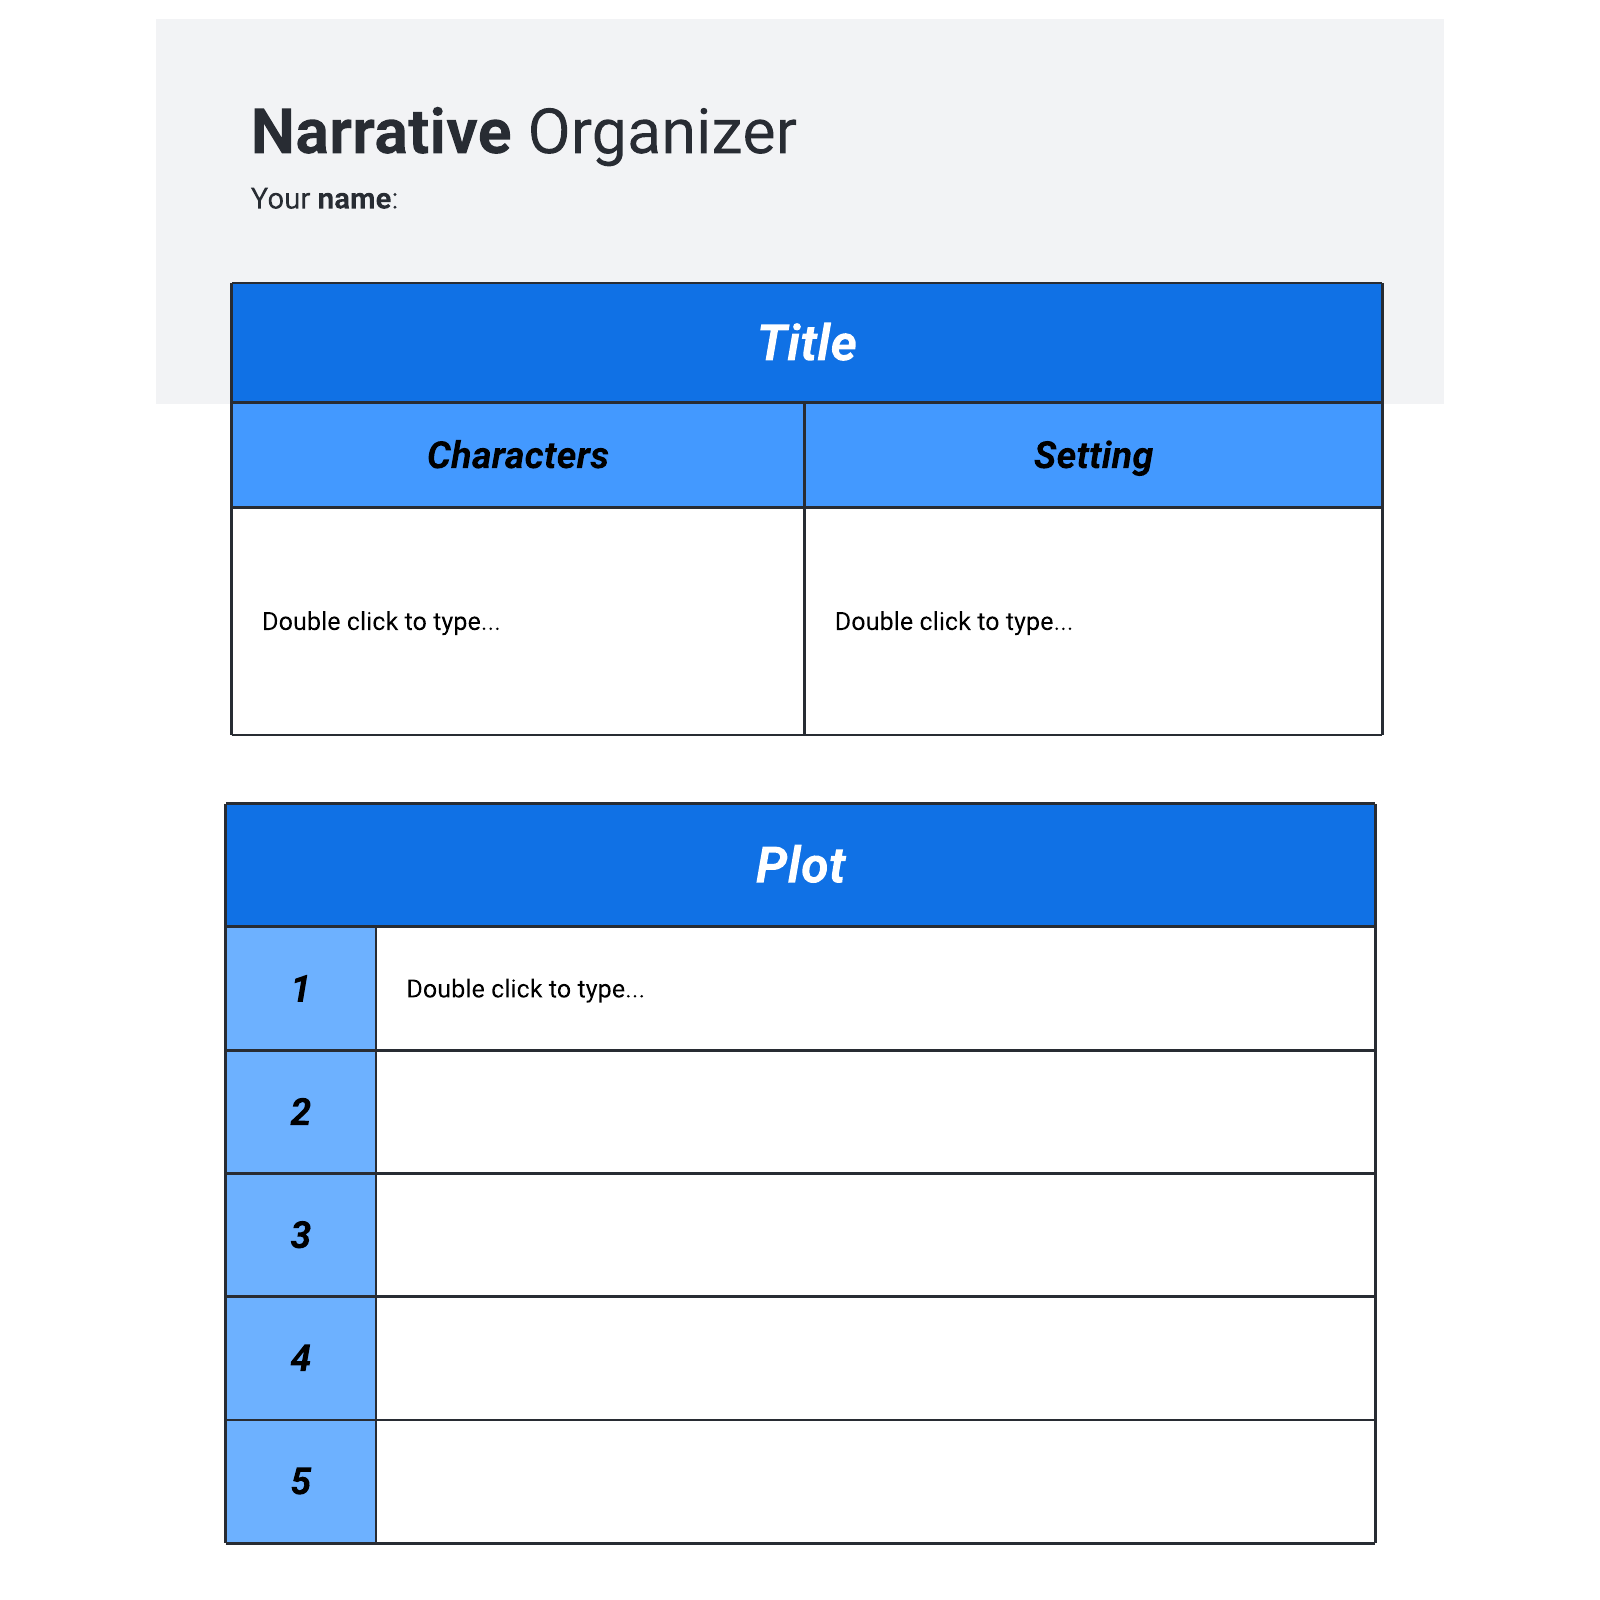 Narrative organizer example